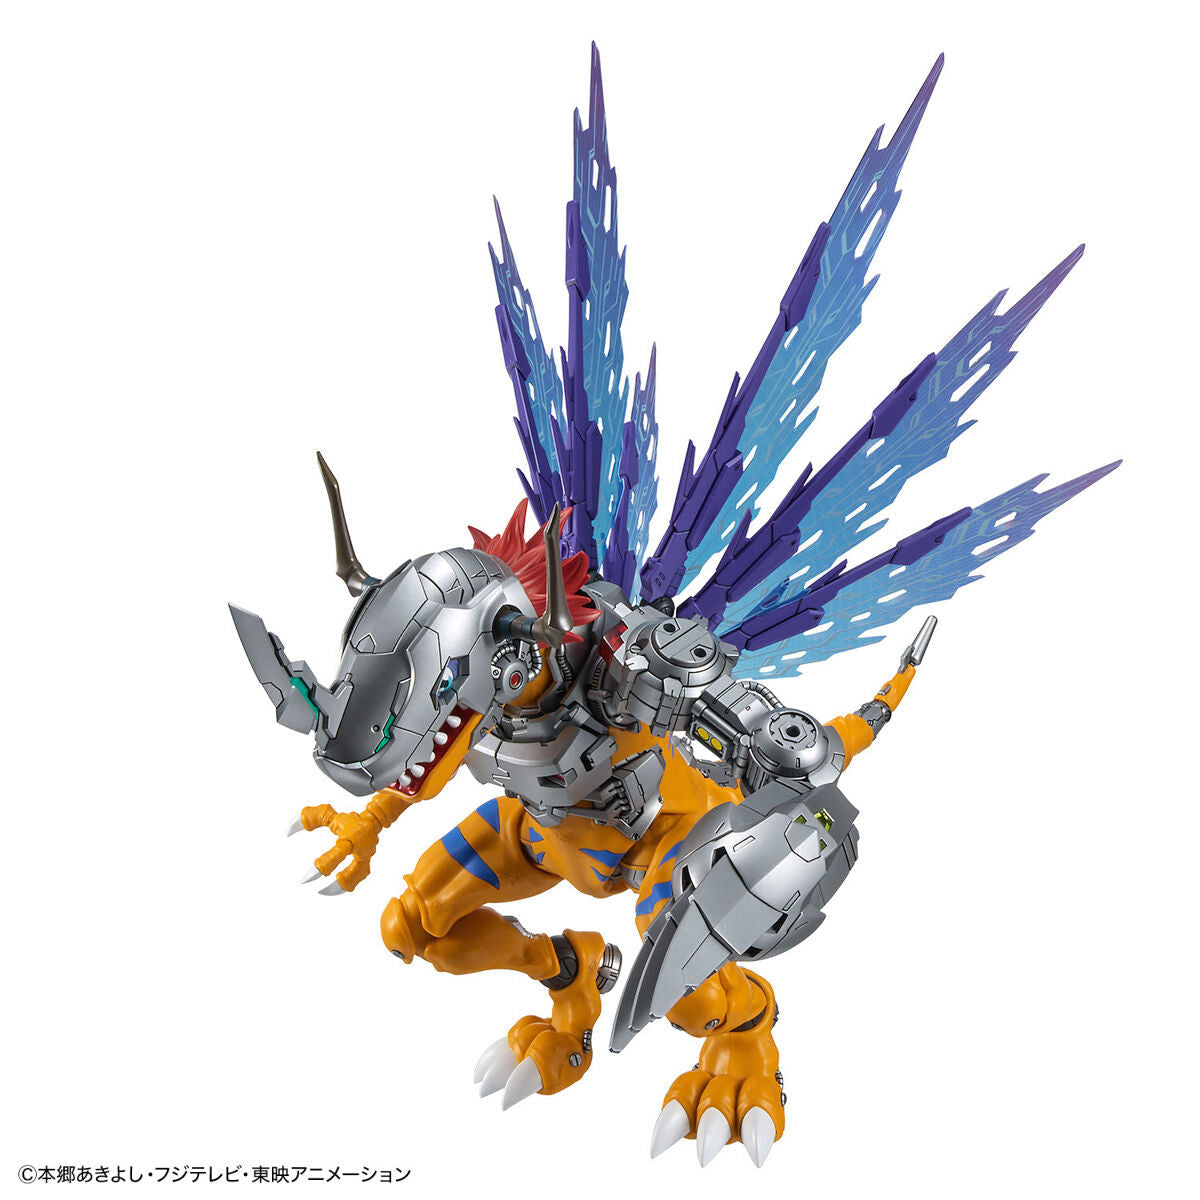 Digimon Figure Rise Standard Amplified Metalgreymon (Vaccine)-Bandai-Ace Cards & Collectibles